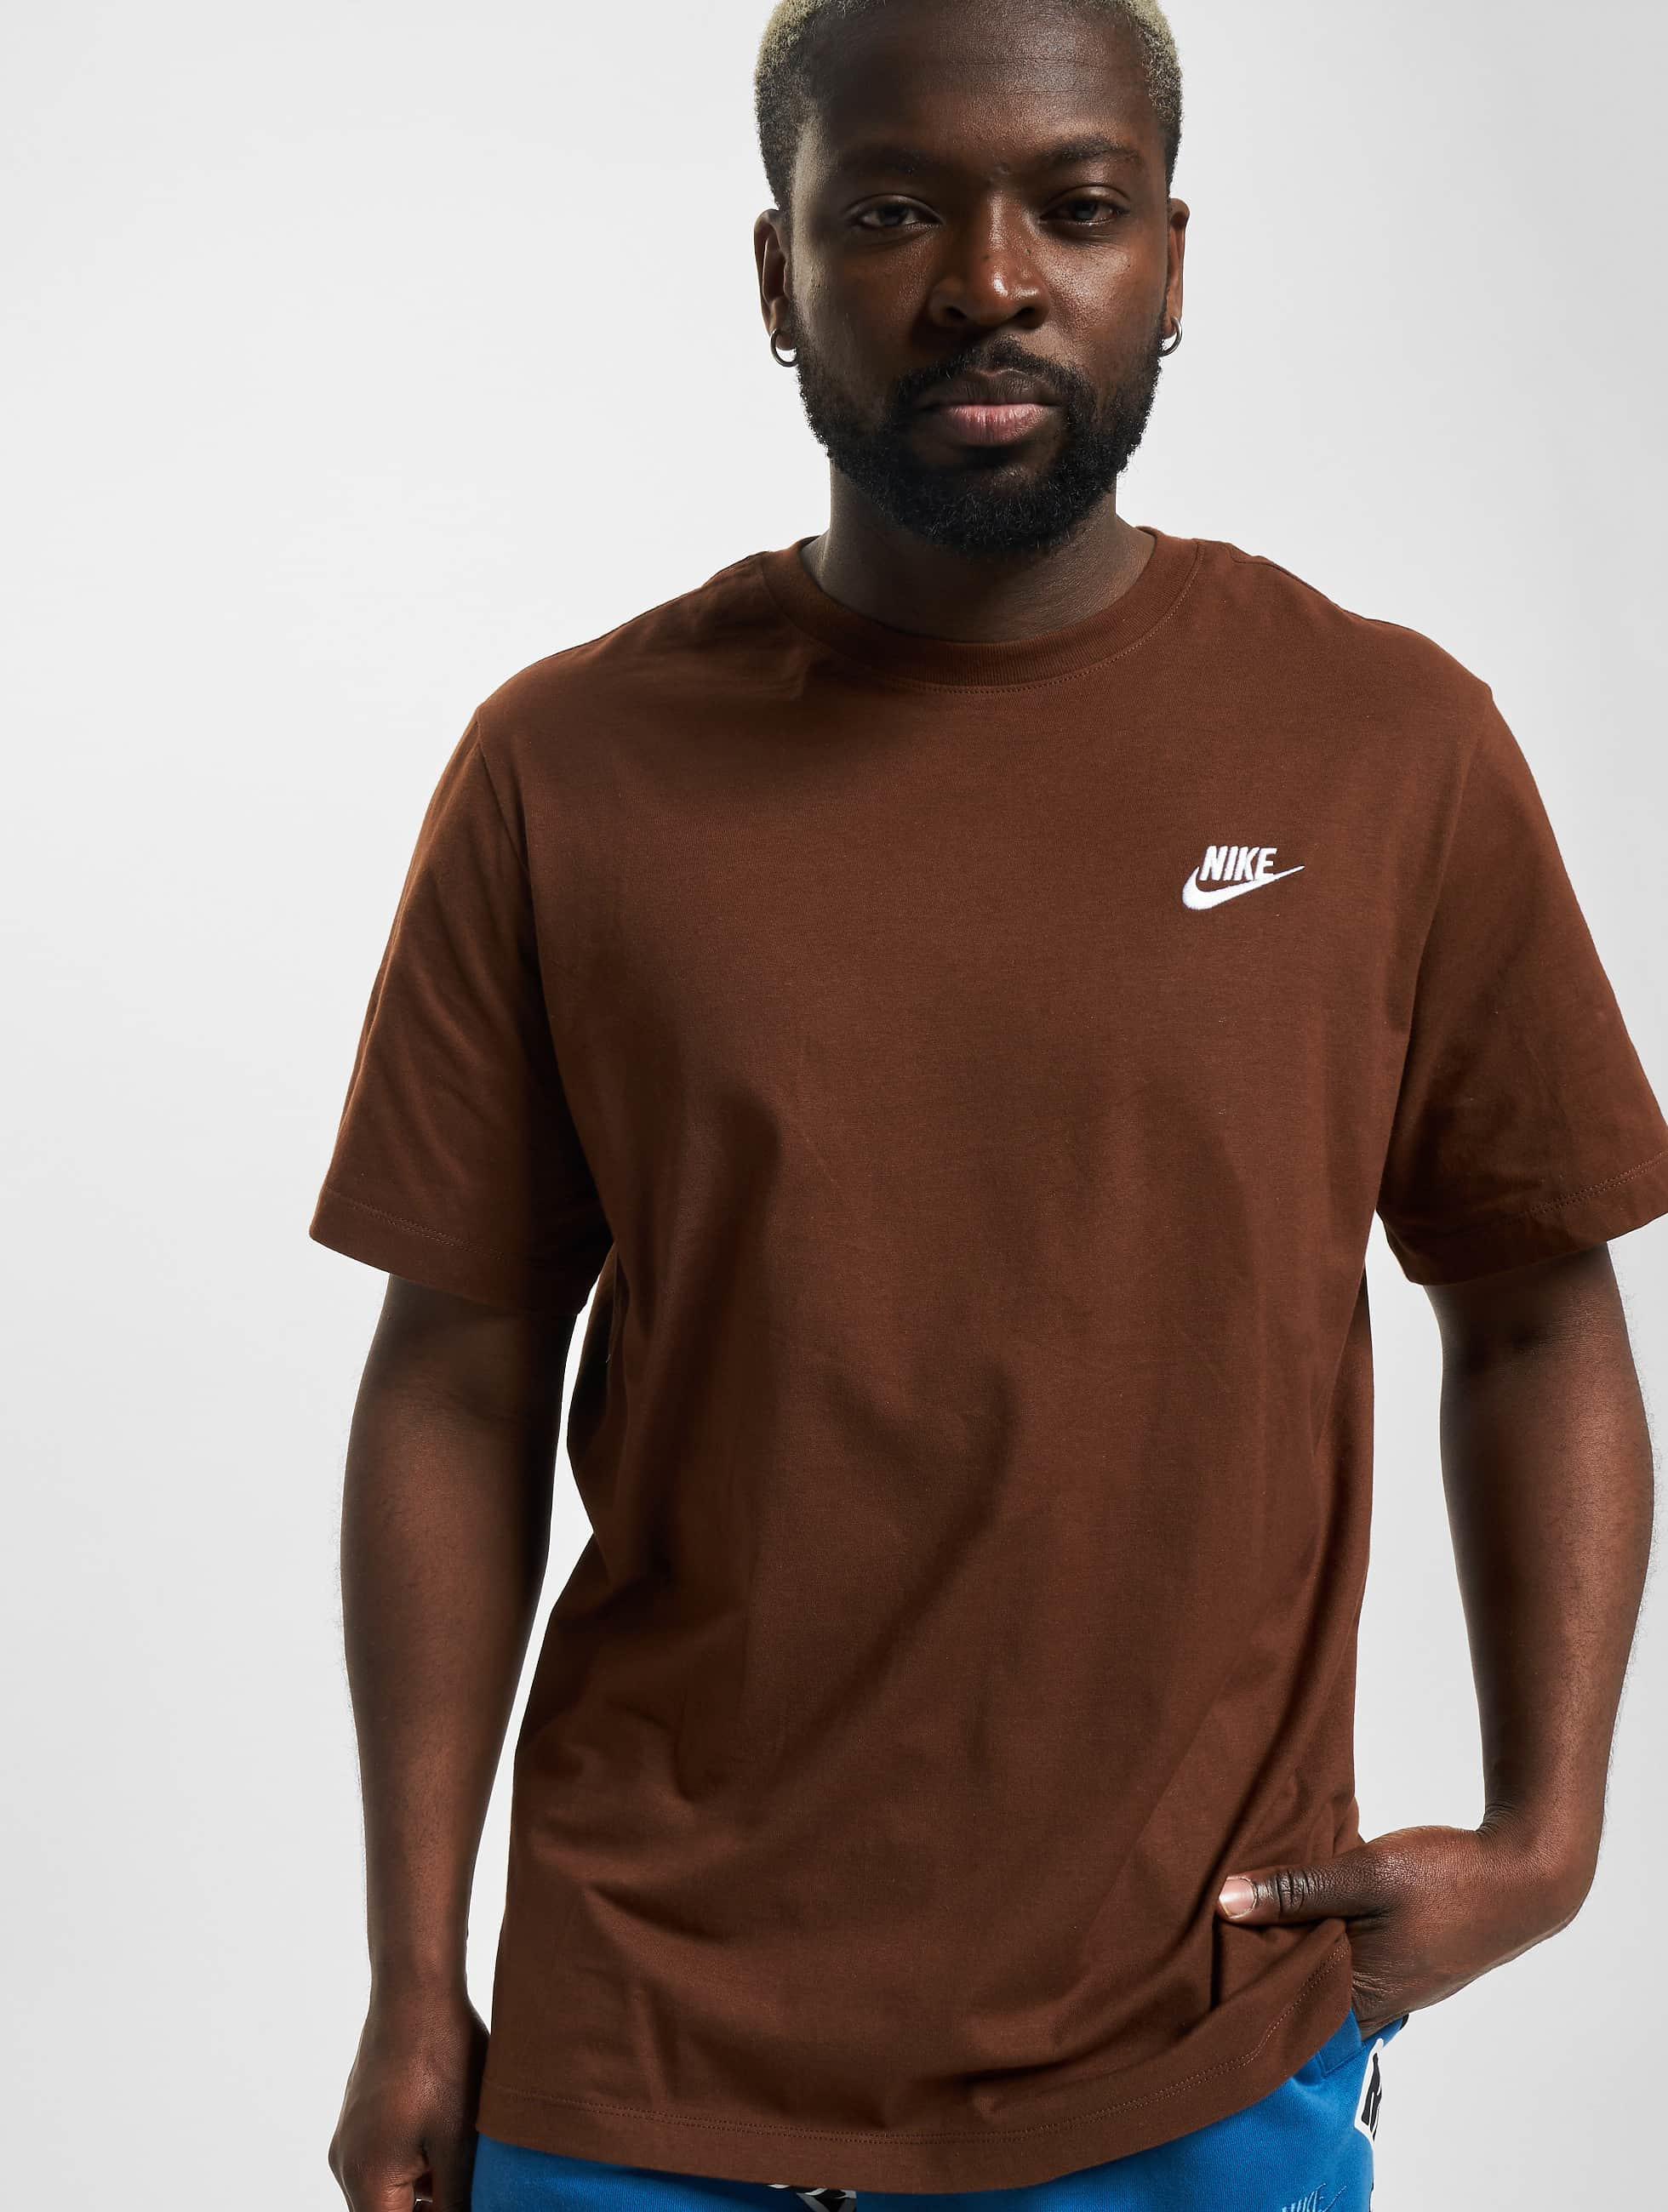 Betrokken cabine slachtoffer Nike bovenstuk / t-shirt Sportswear Club in bruin 982250